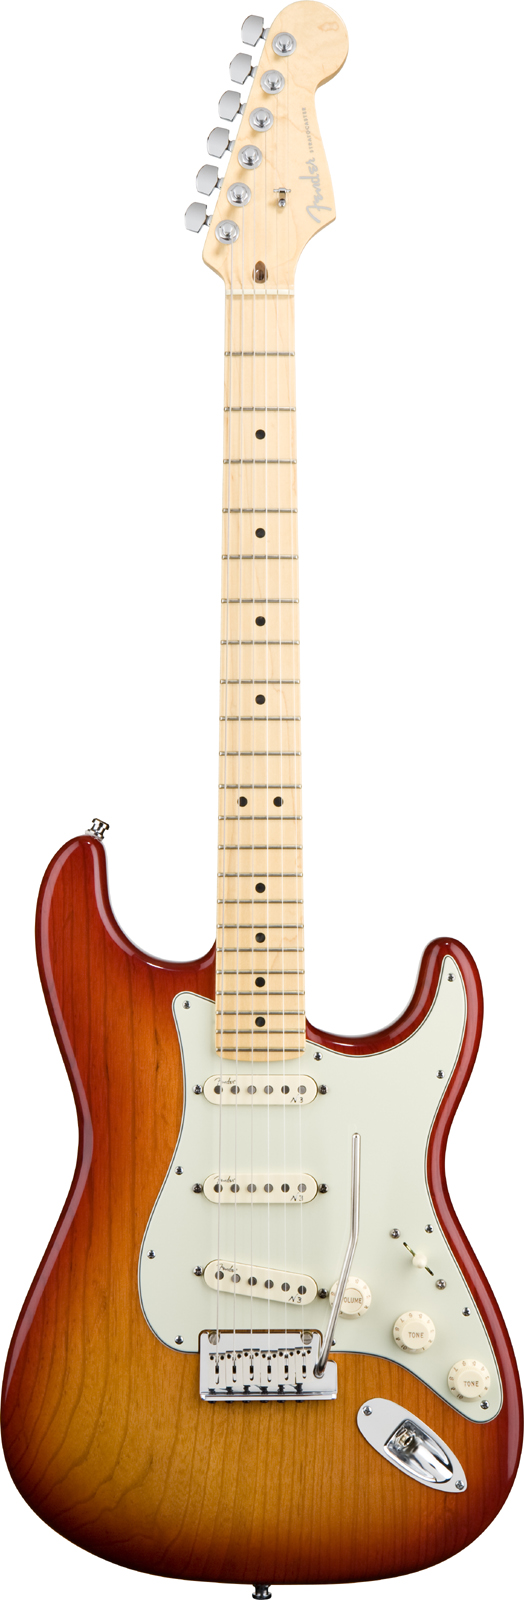 American Deluxe Stratocaster Ash